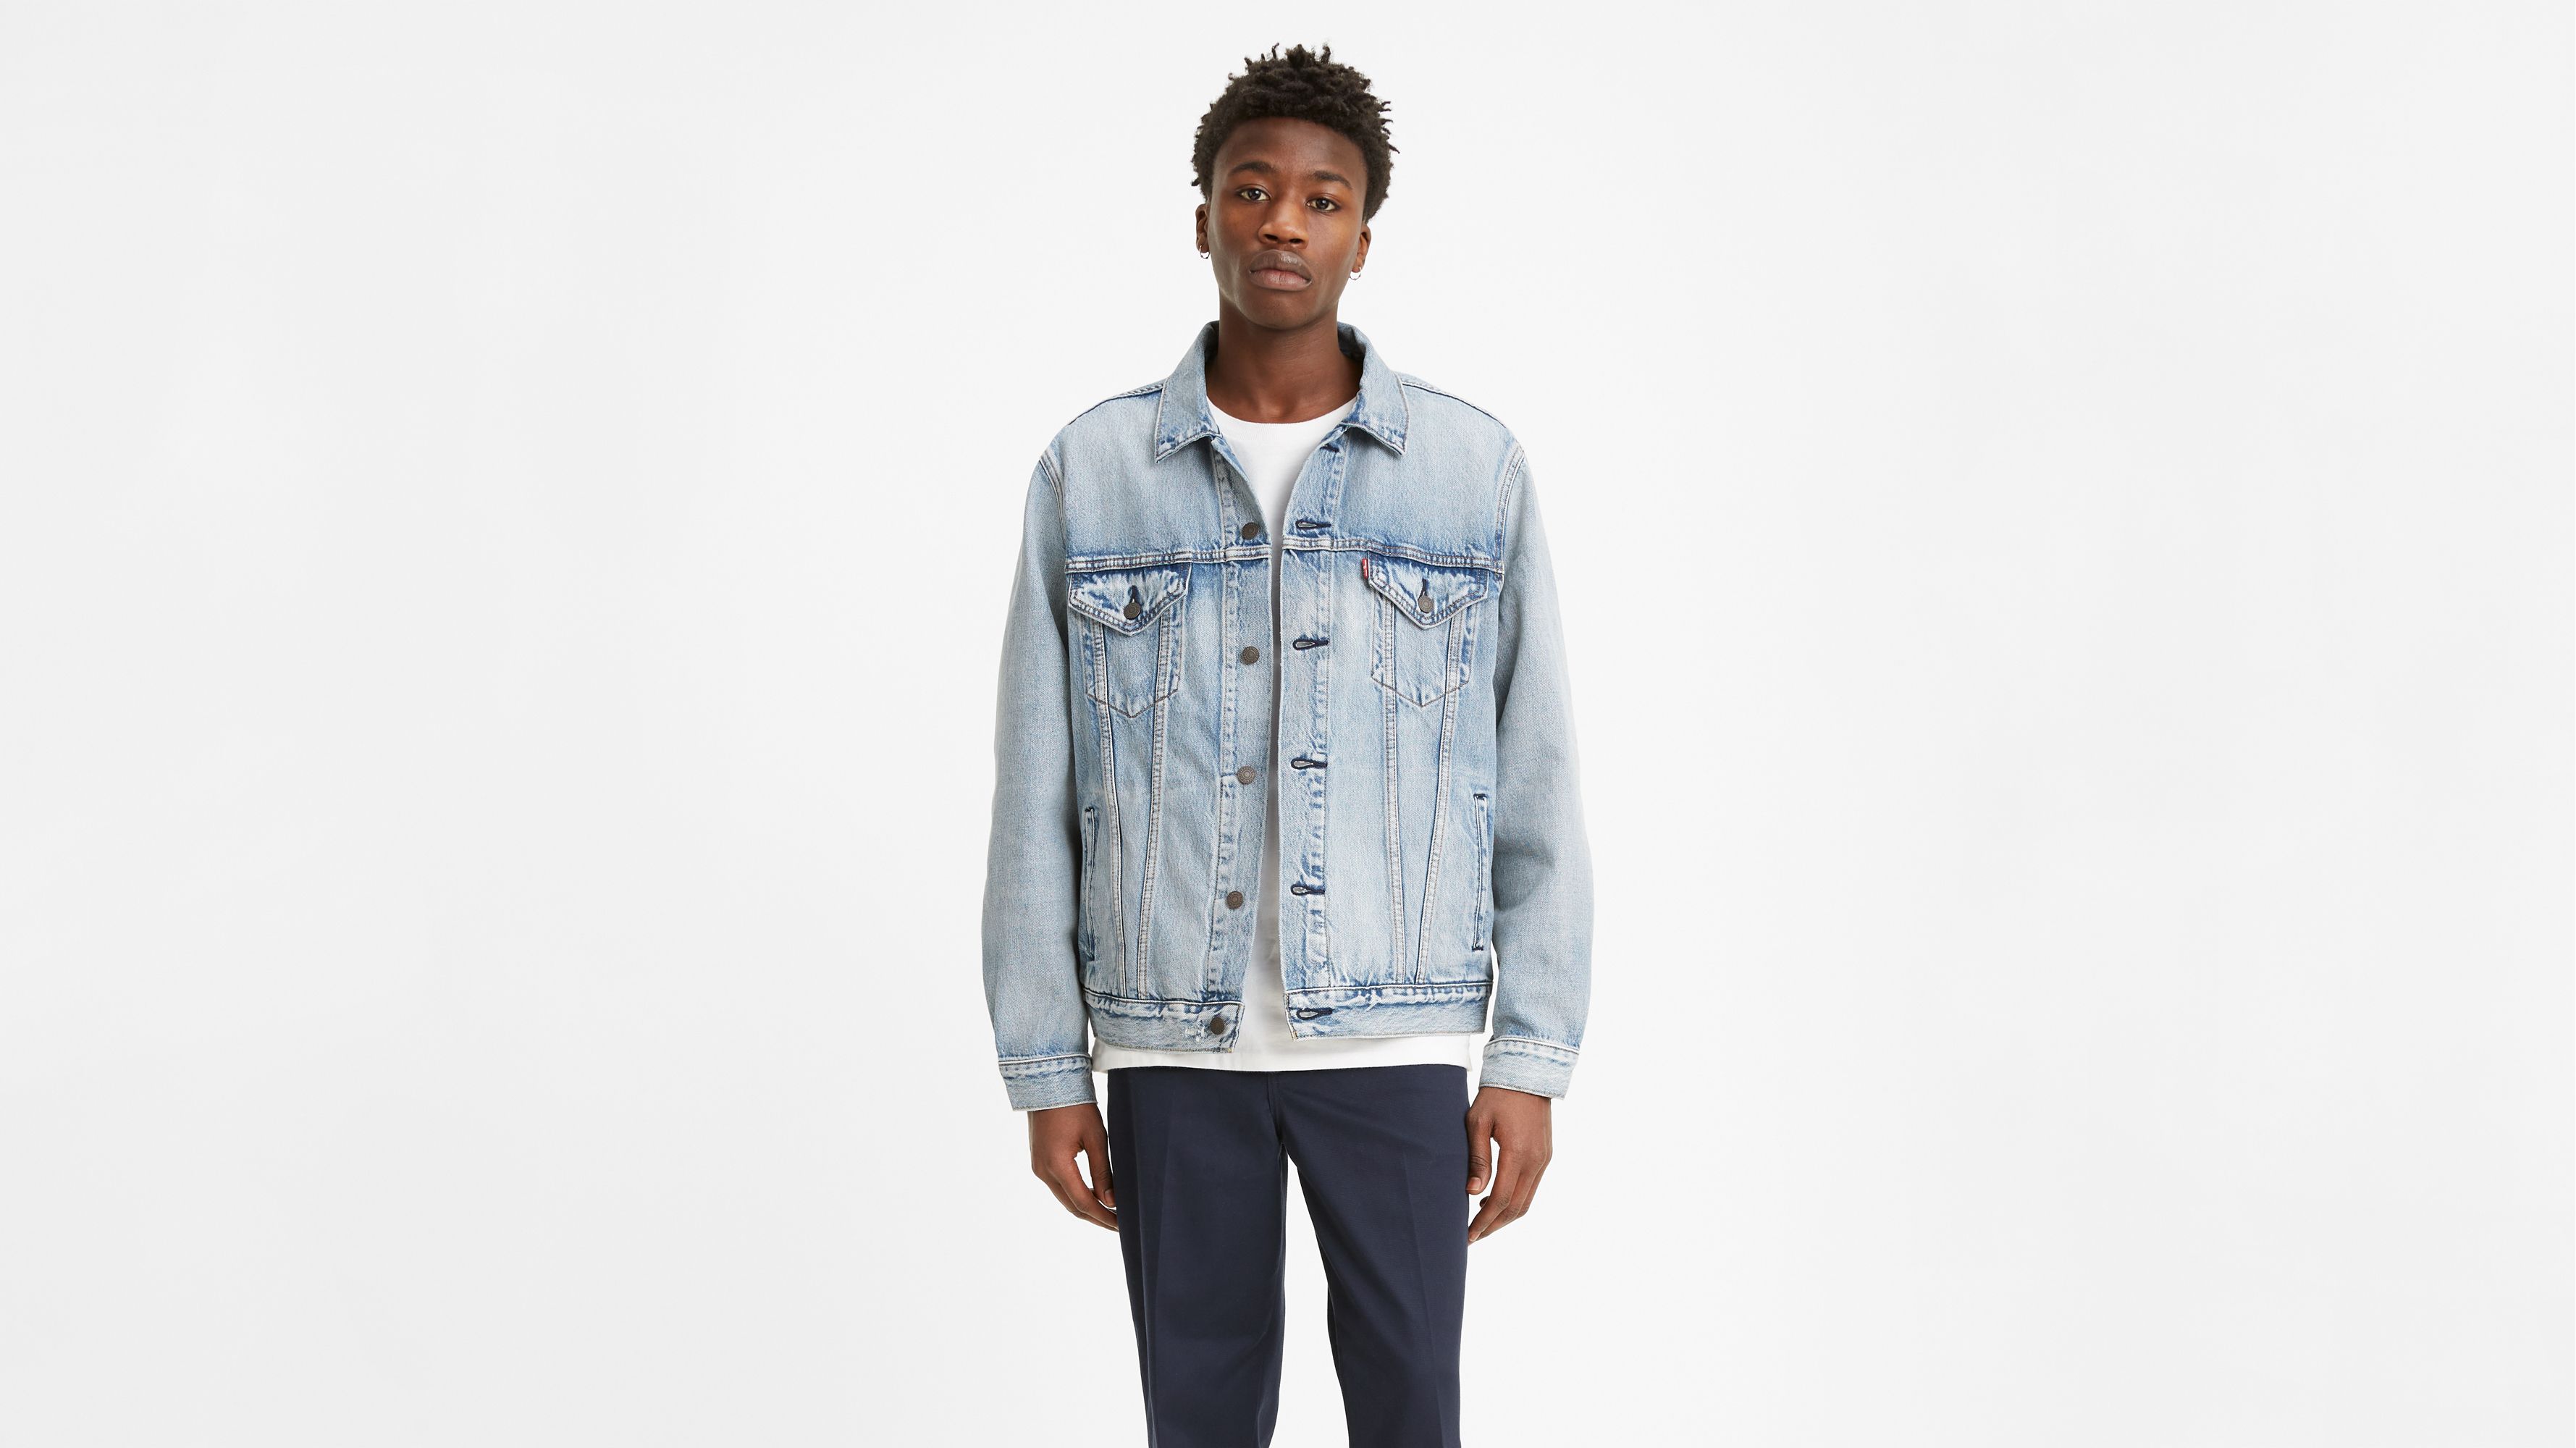 levis vintage jeans jacket